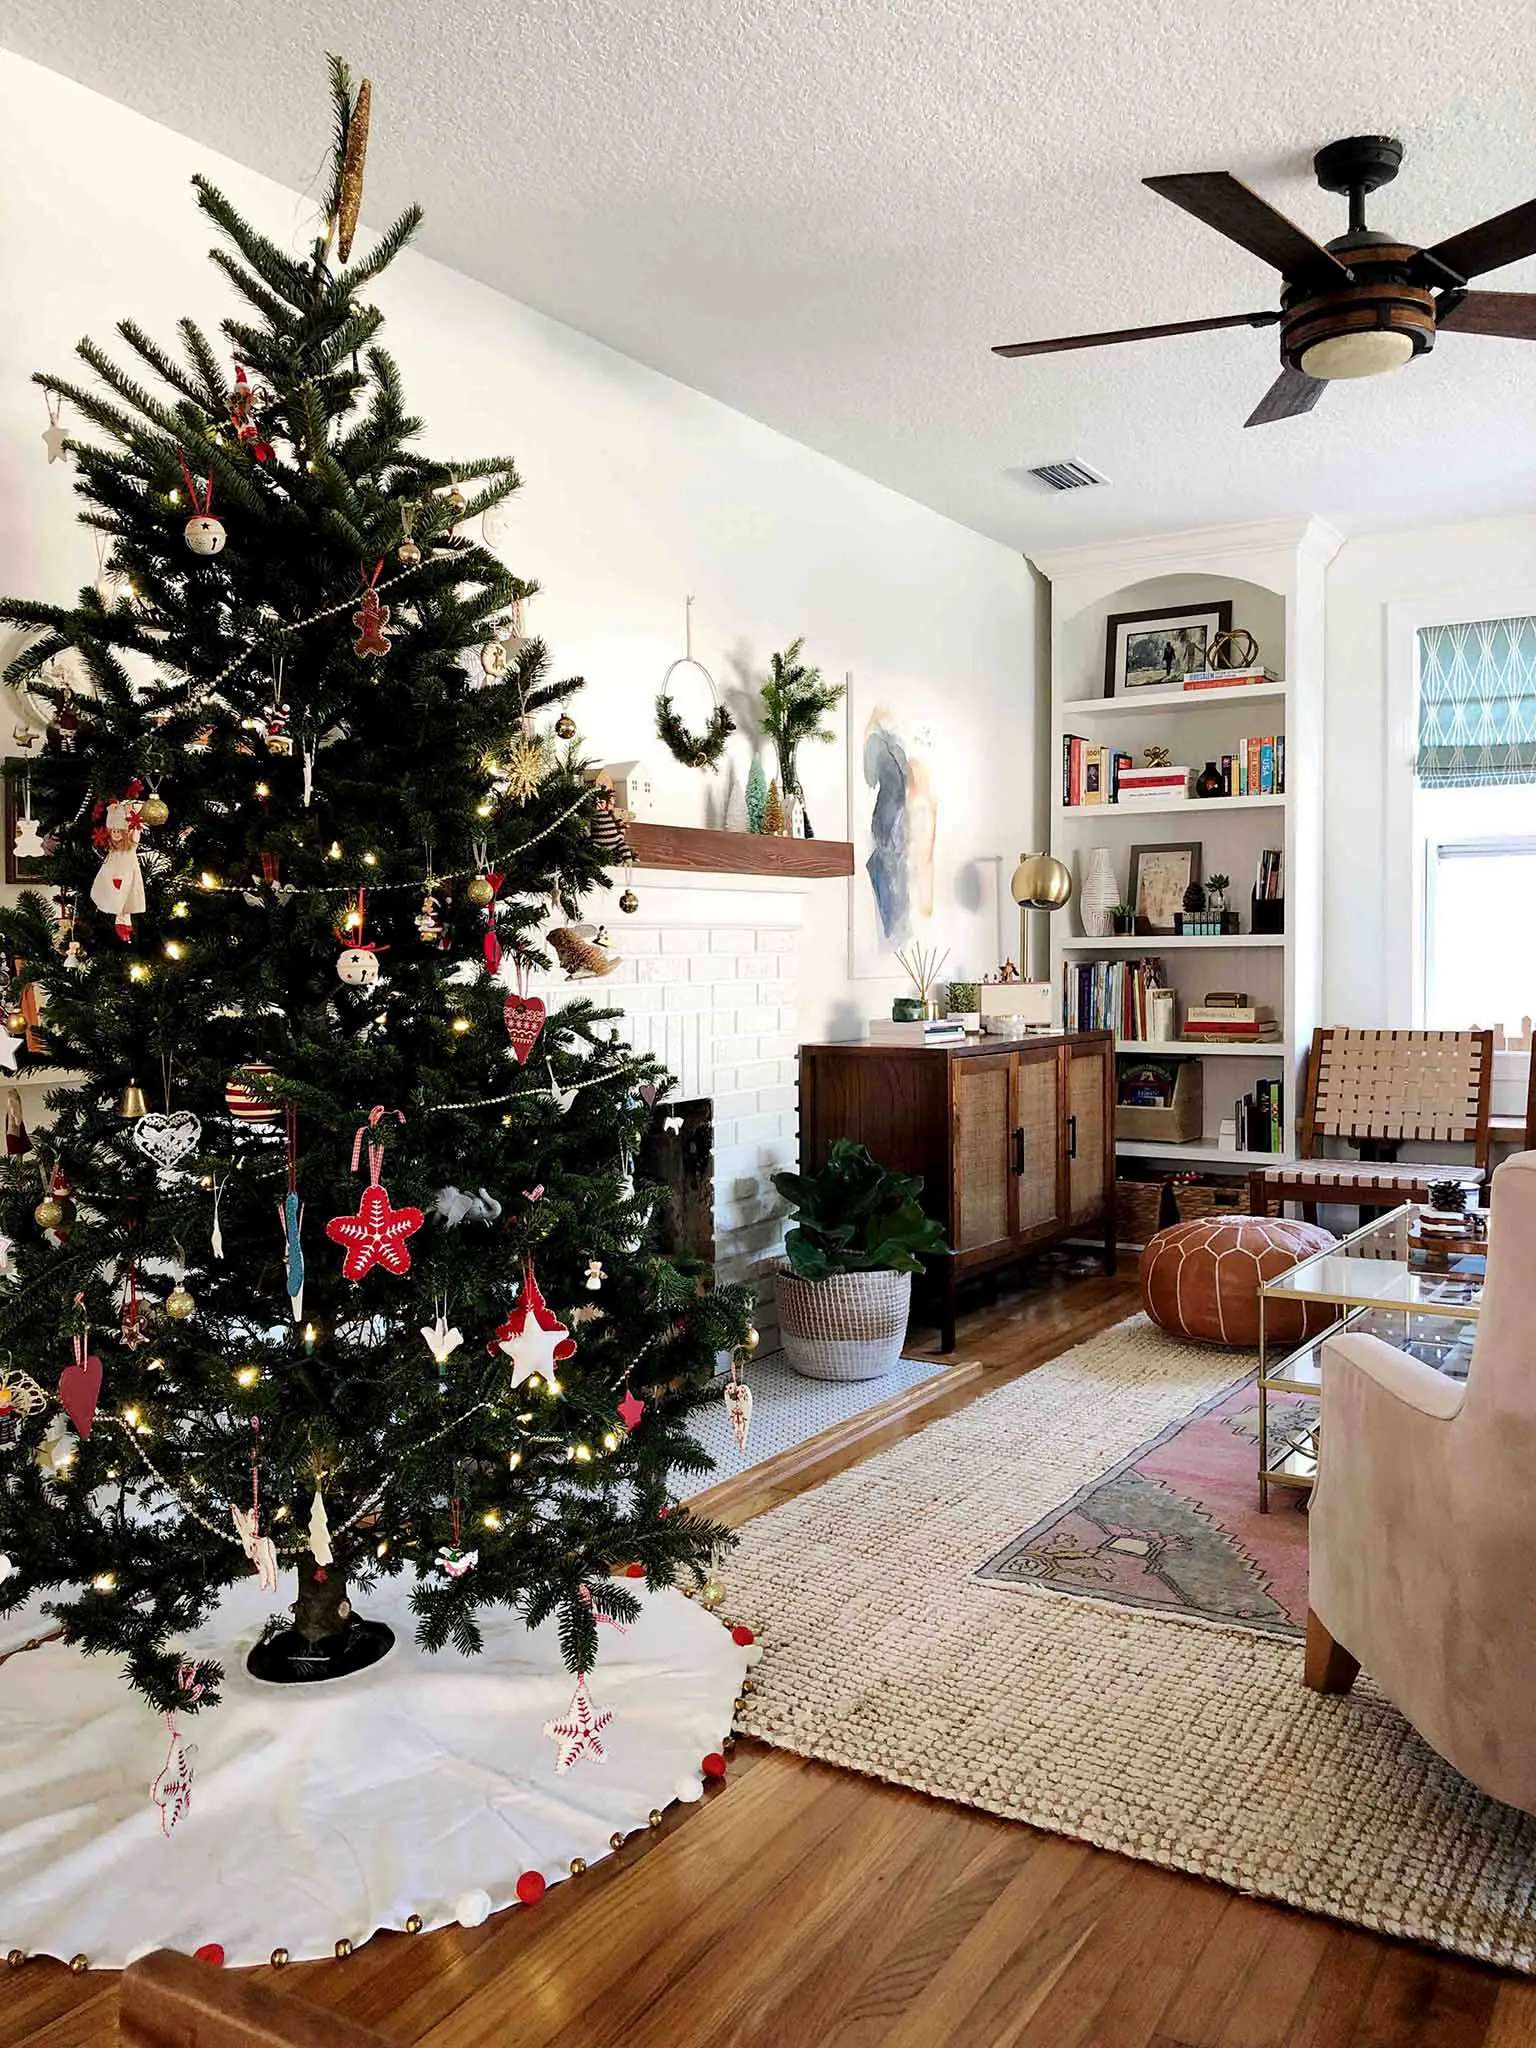 Christmas tree in the living room - Simple Yet Cozy Christmas Decor - That Homebird Life Blog #christmasdecor #christmasinspiration